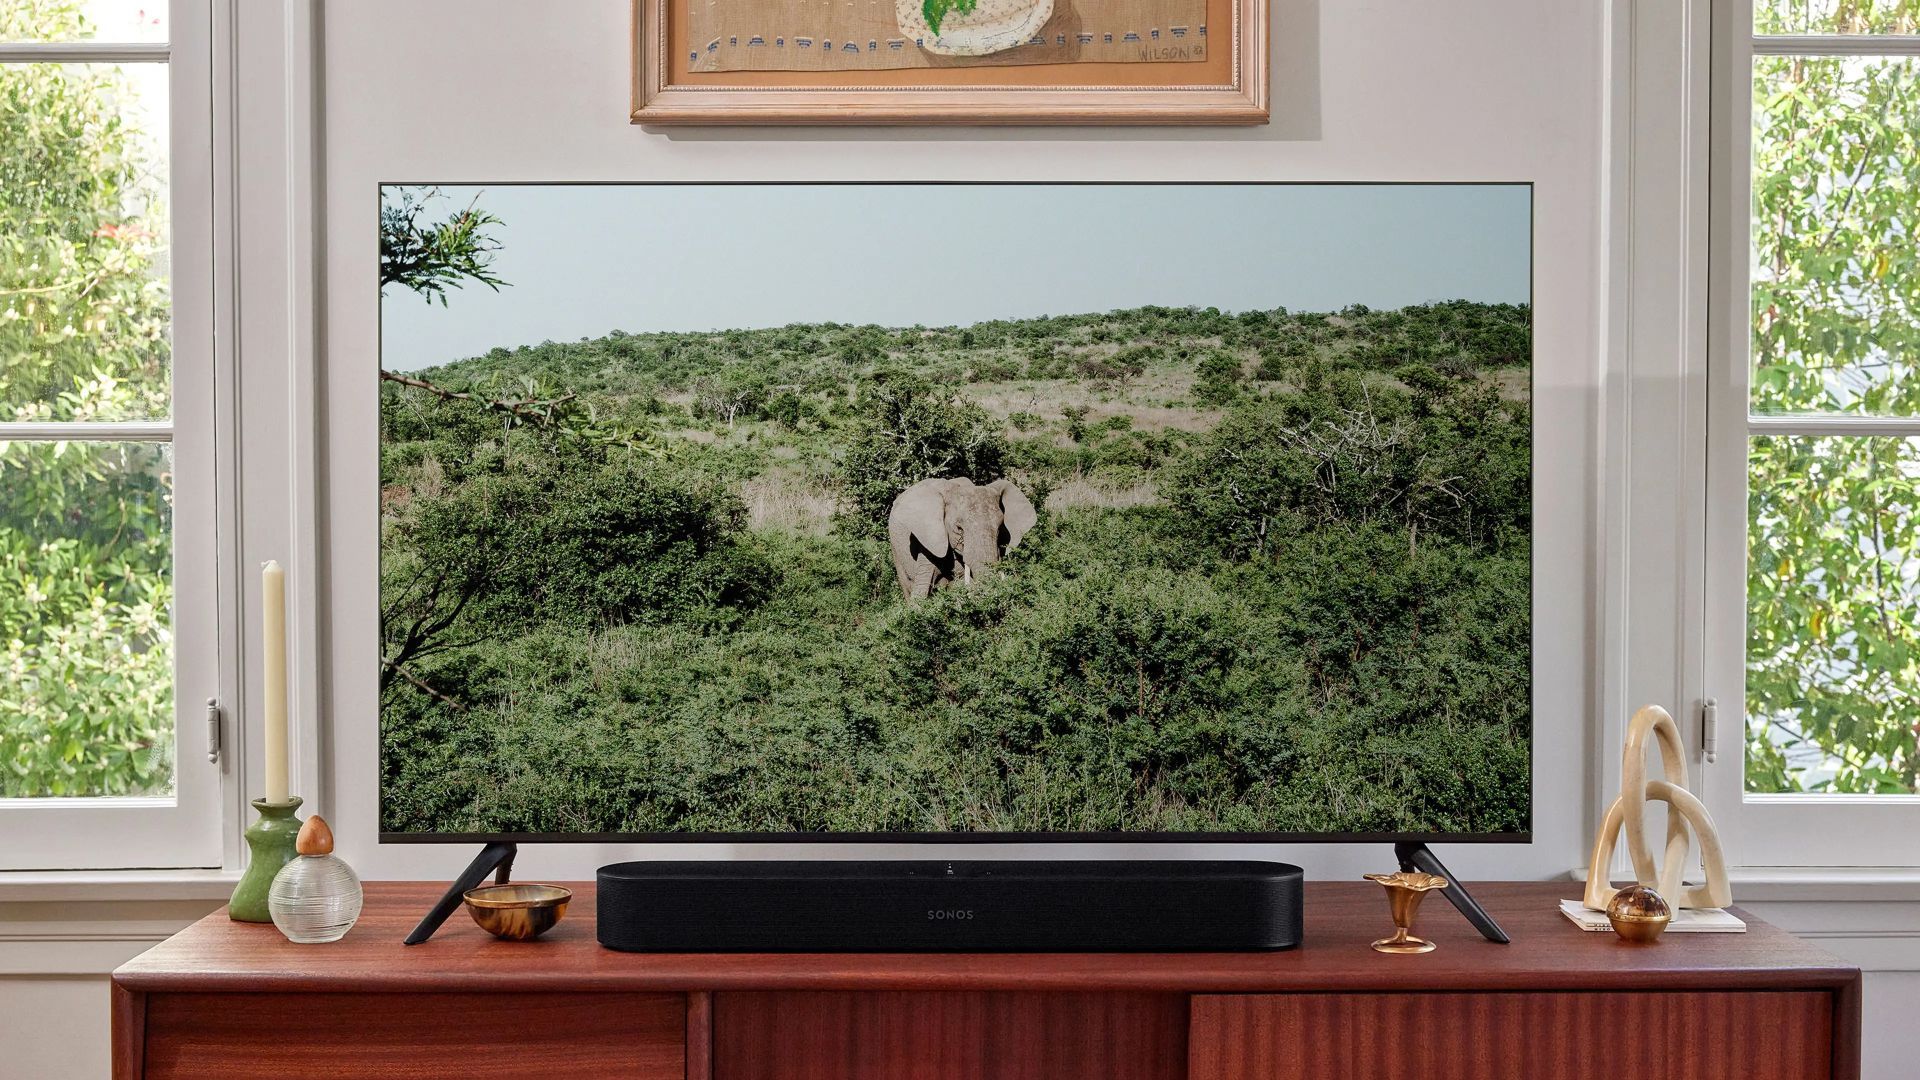 The Sonos Beam soundbar on a TV stand